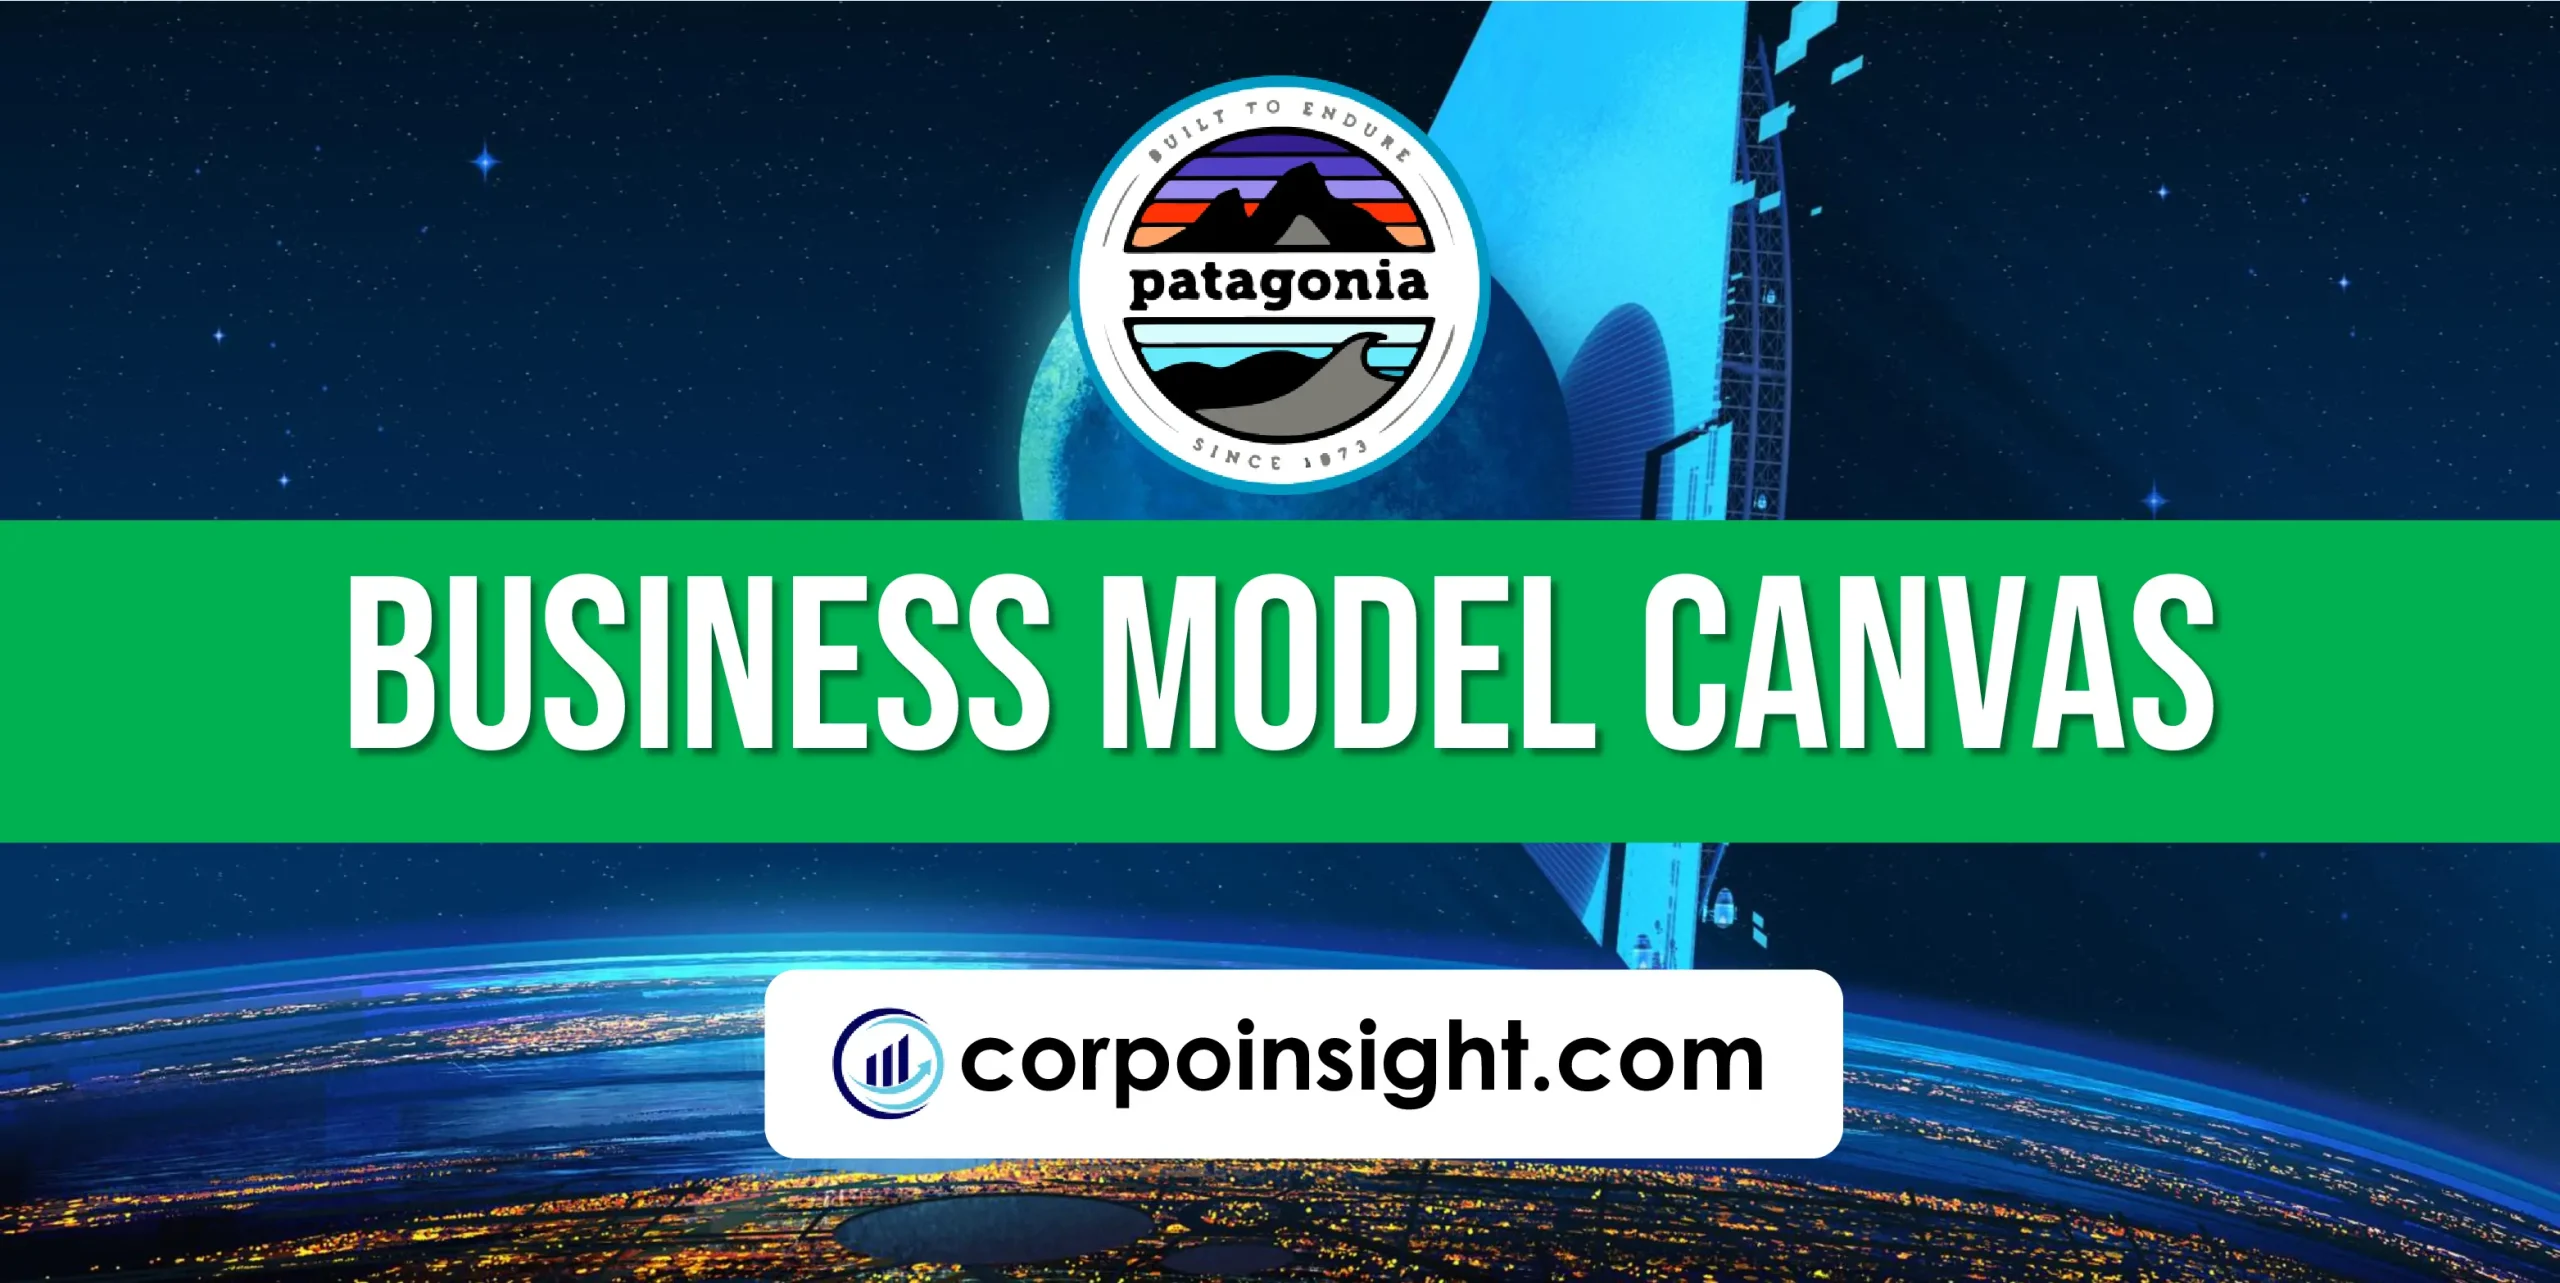 Patagonia Business Model